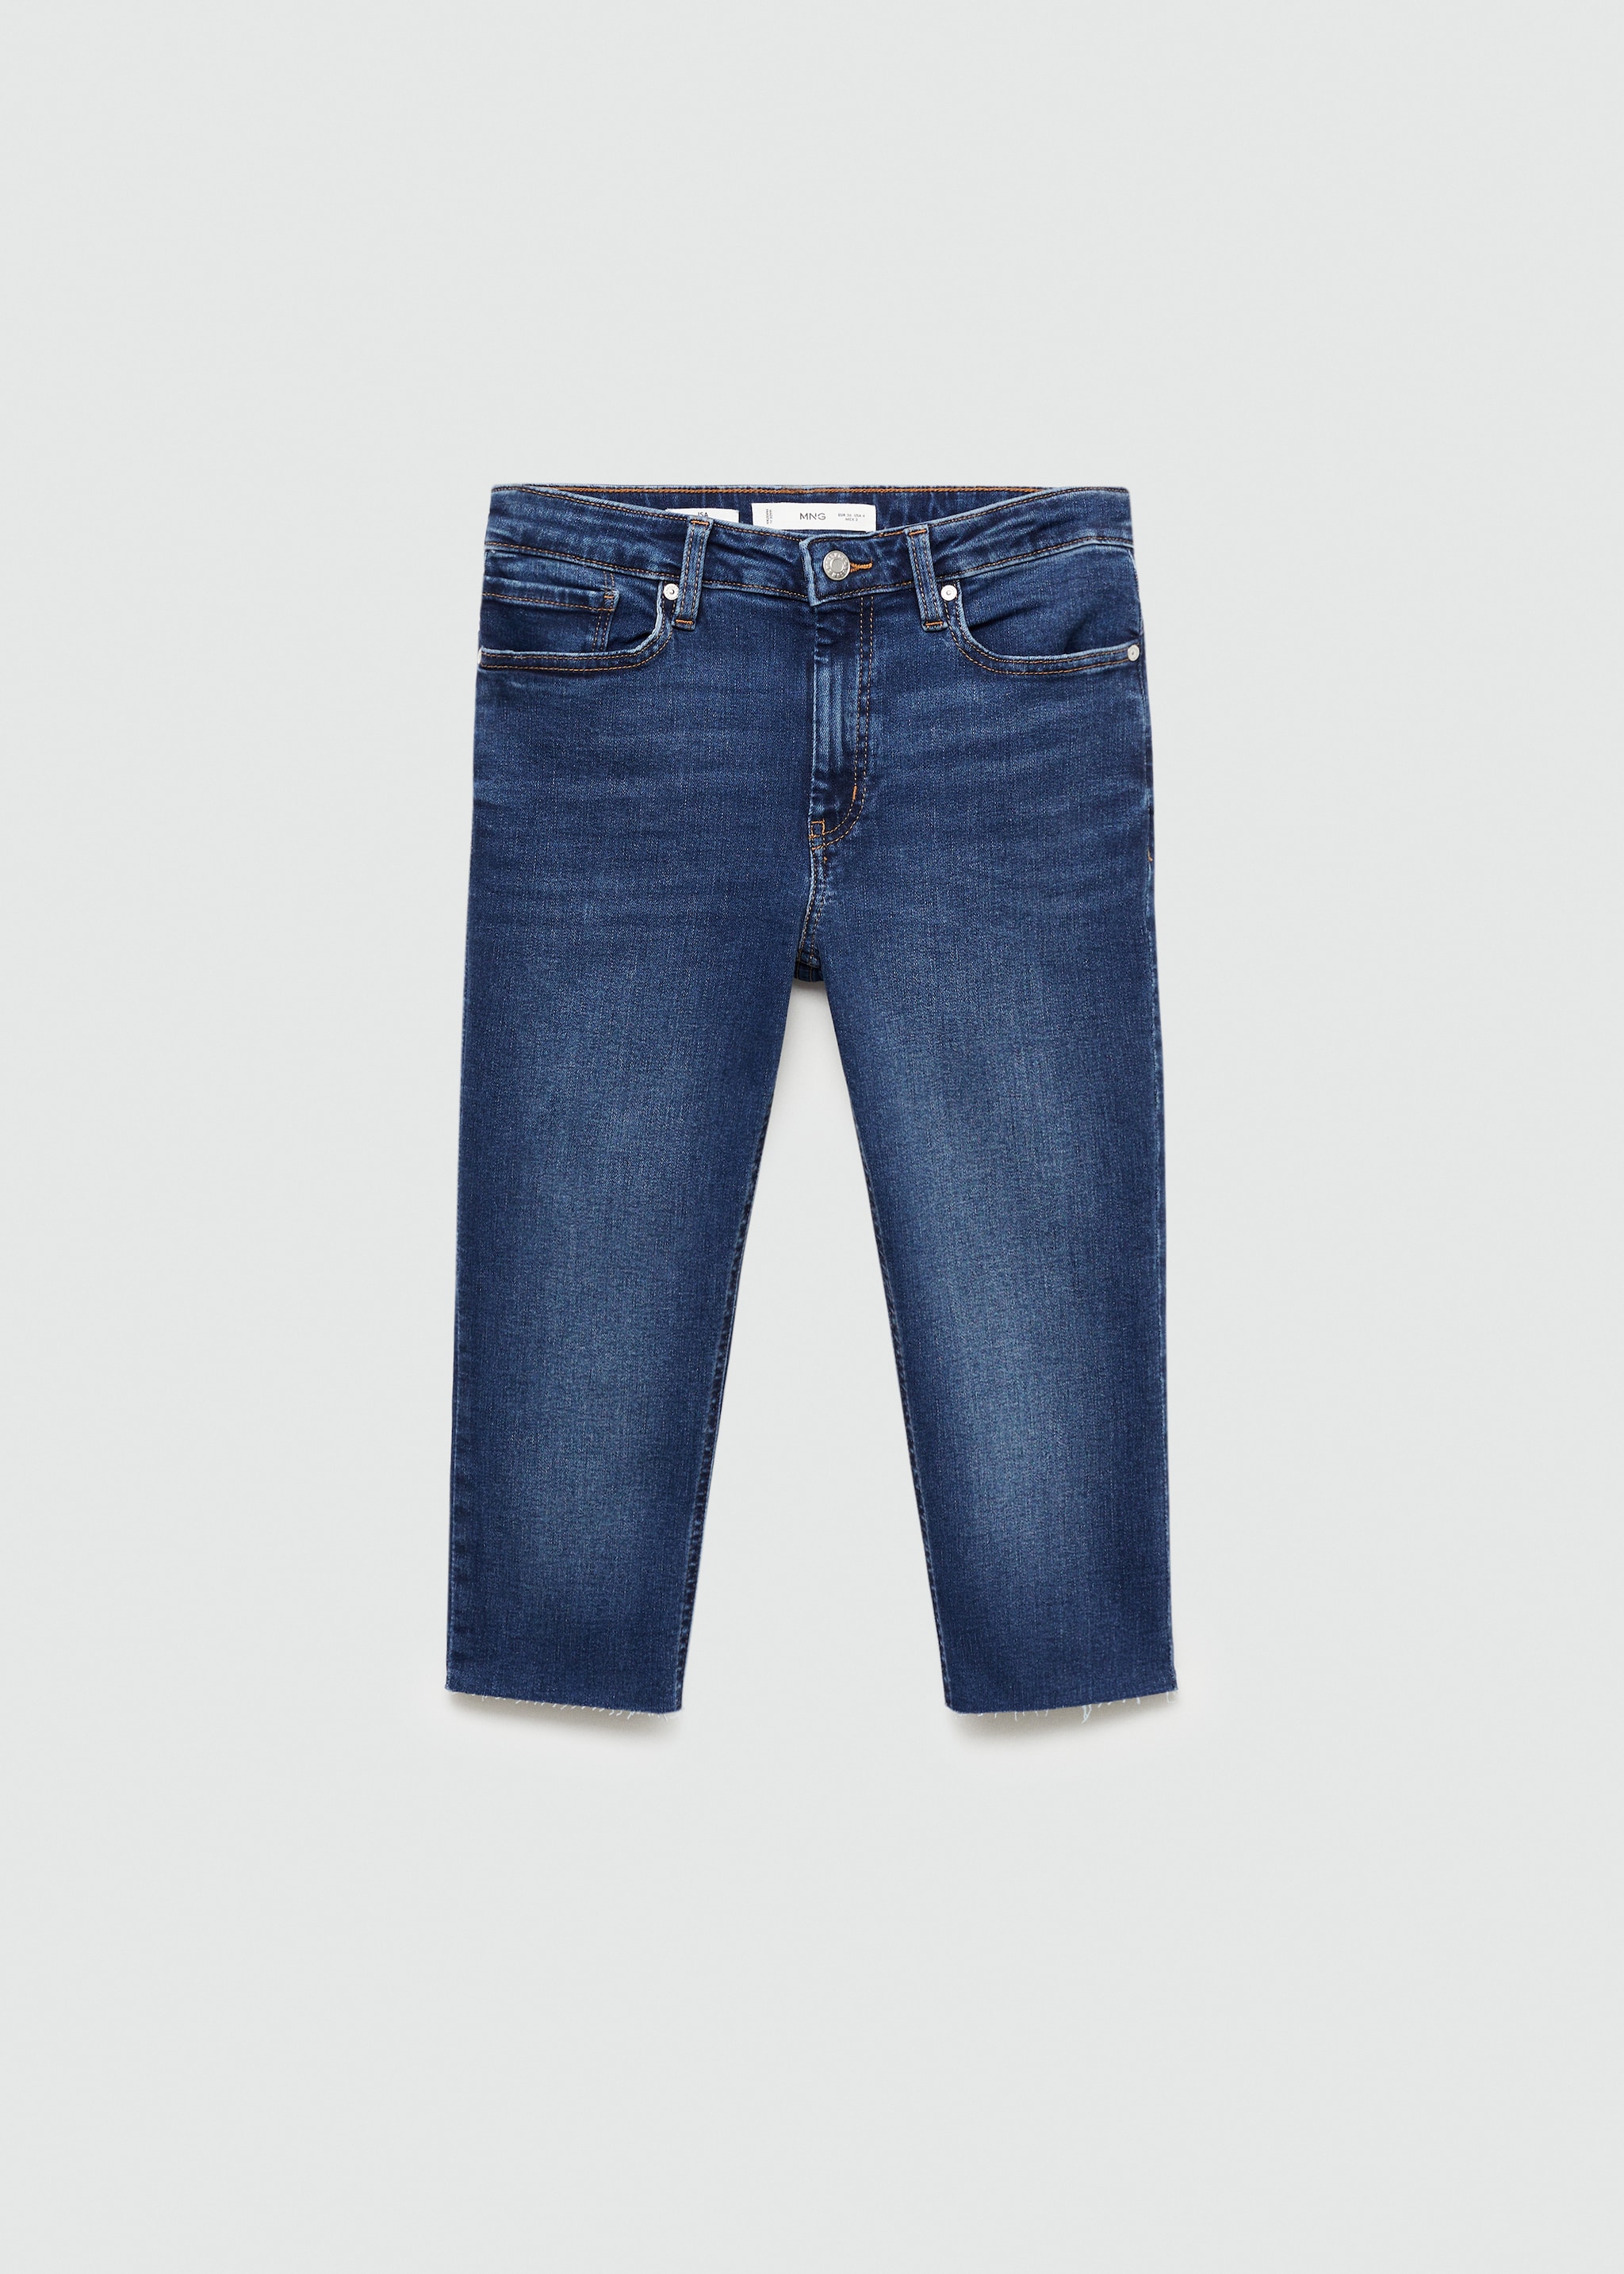 Capri slim-fit jeans - Article without model